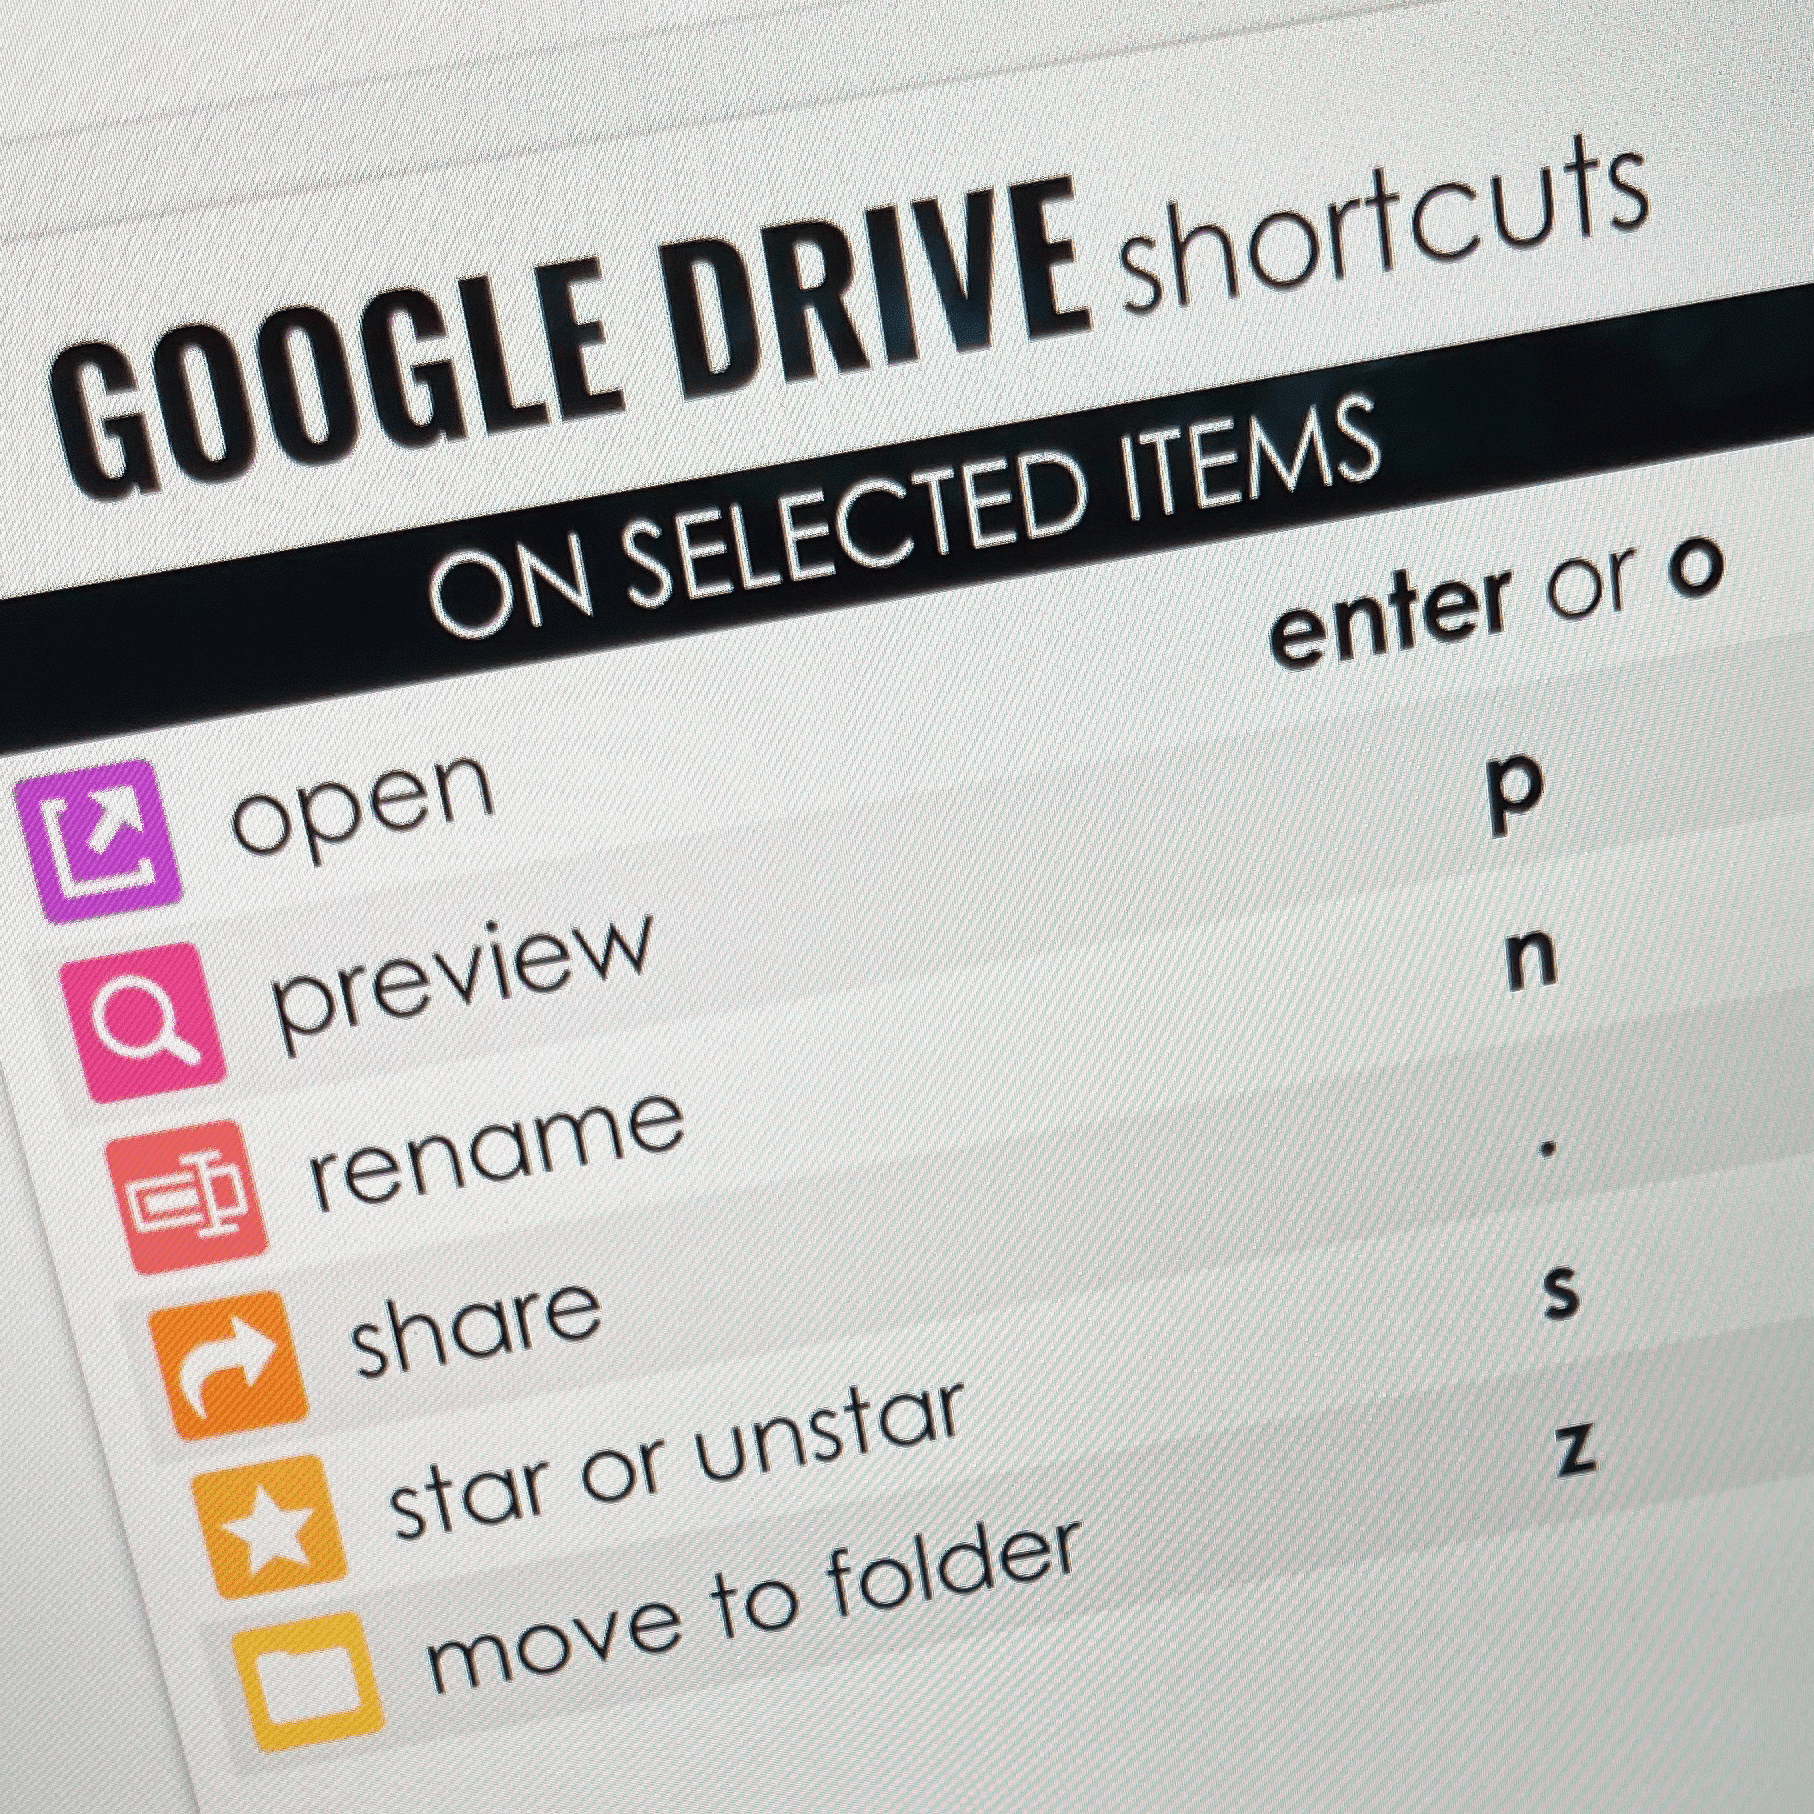 google drive shortcuts at a glance